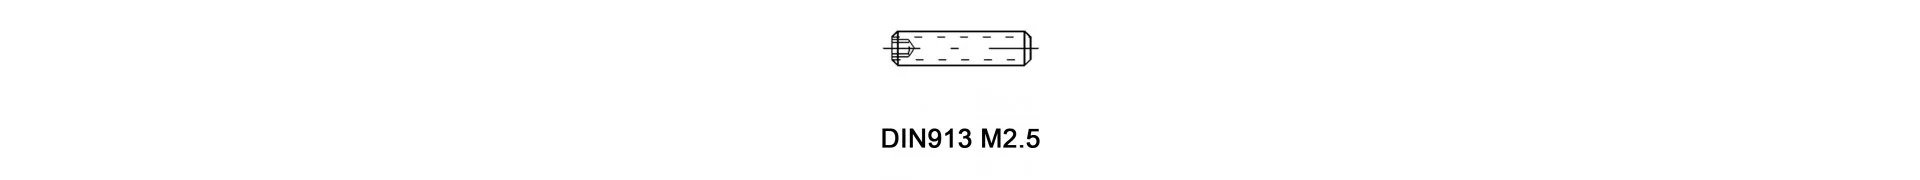 DIN913 M2.5